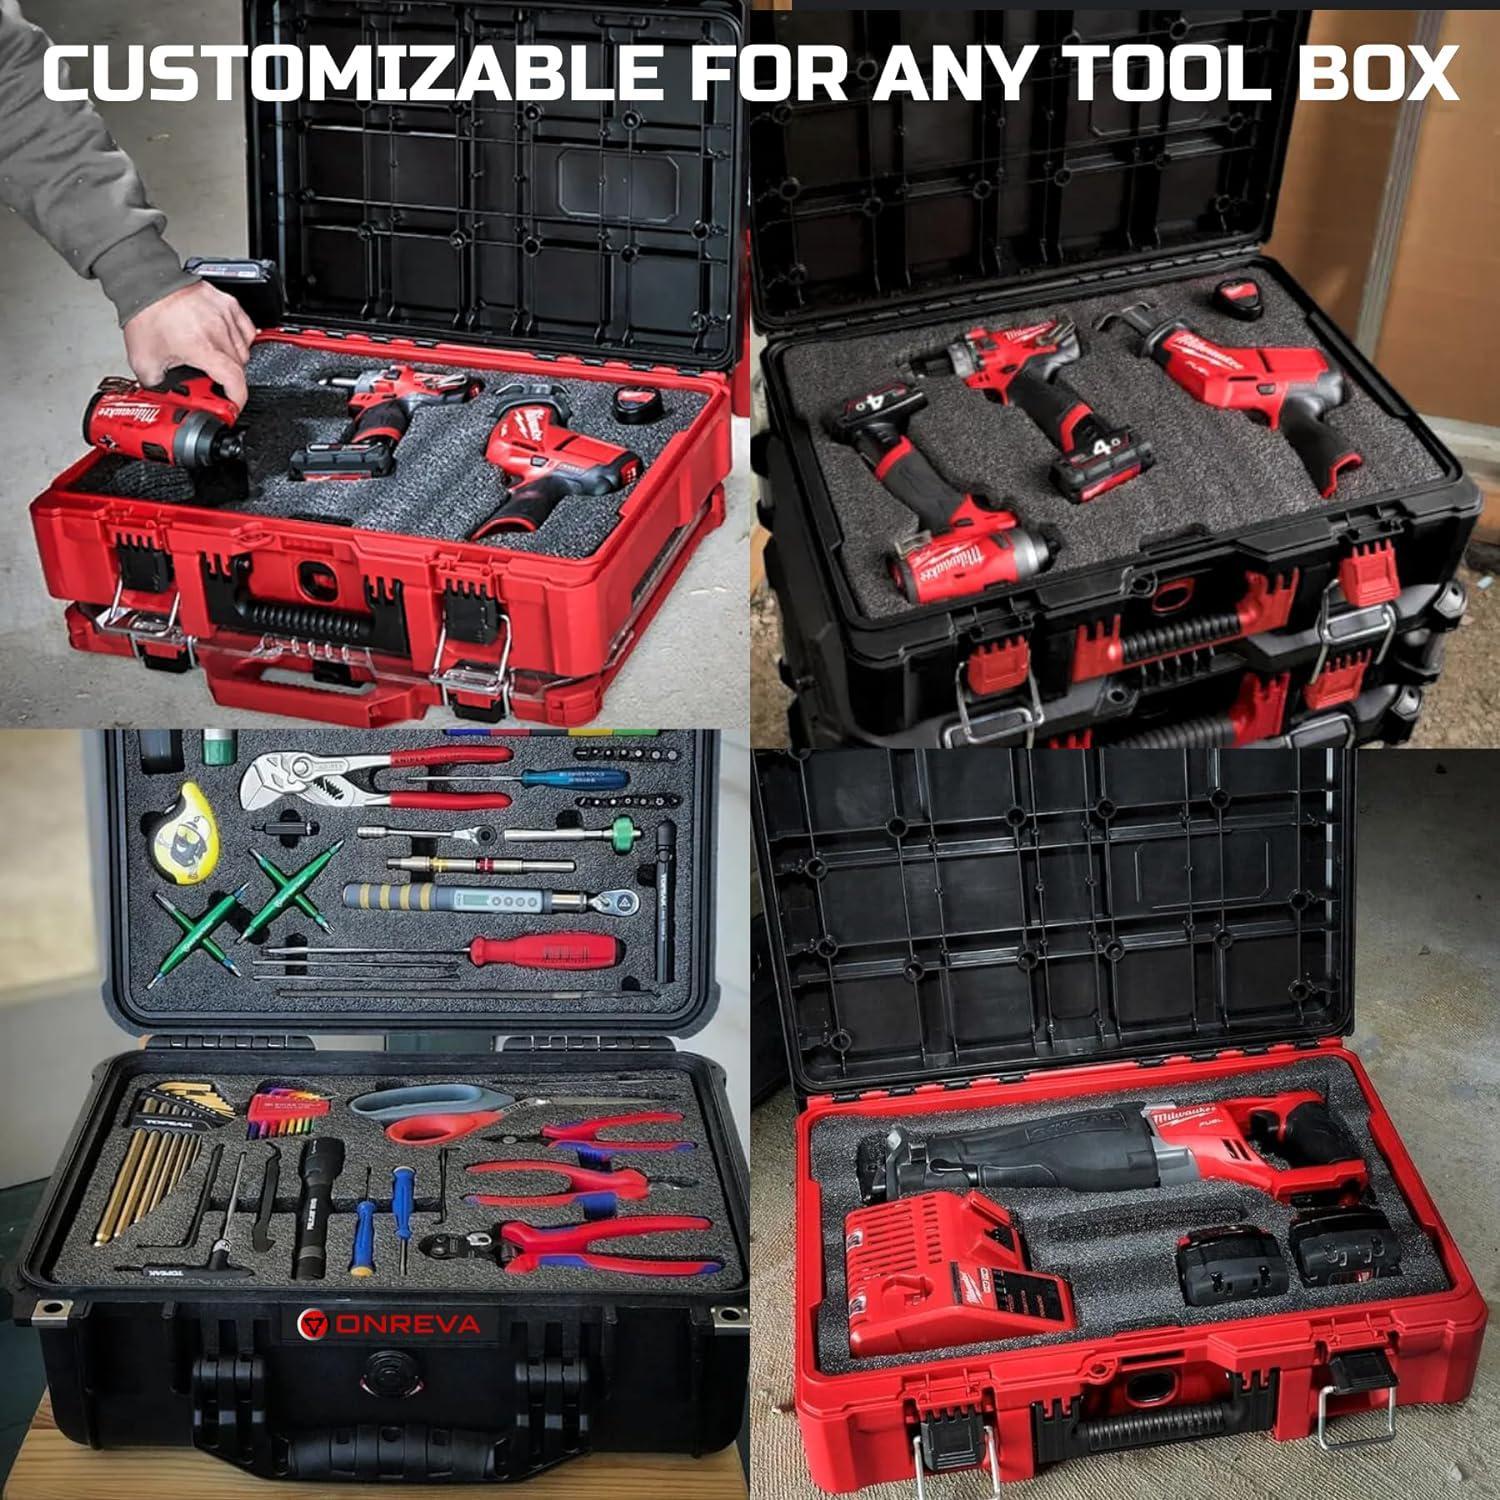 ONREVA 32pcs Tool Box Organizer Tray Dividers Set, Toolbox Organizer and Storage Trays Kit, Workbench Cabinet Bins, Tool Chest Drawer Organization